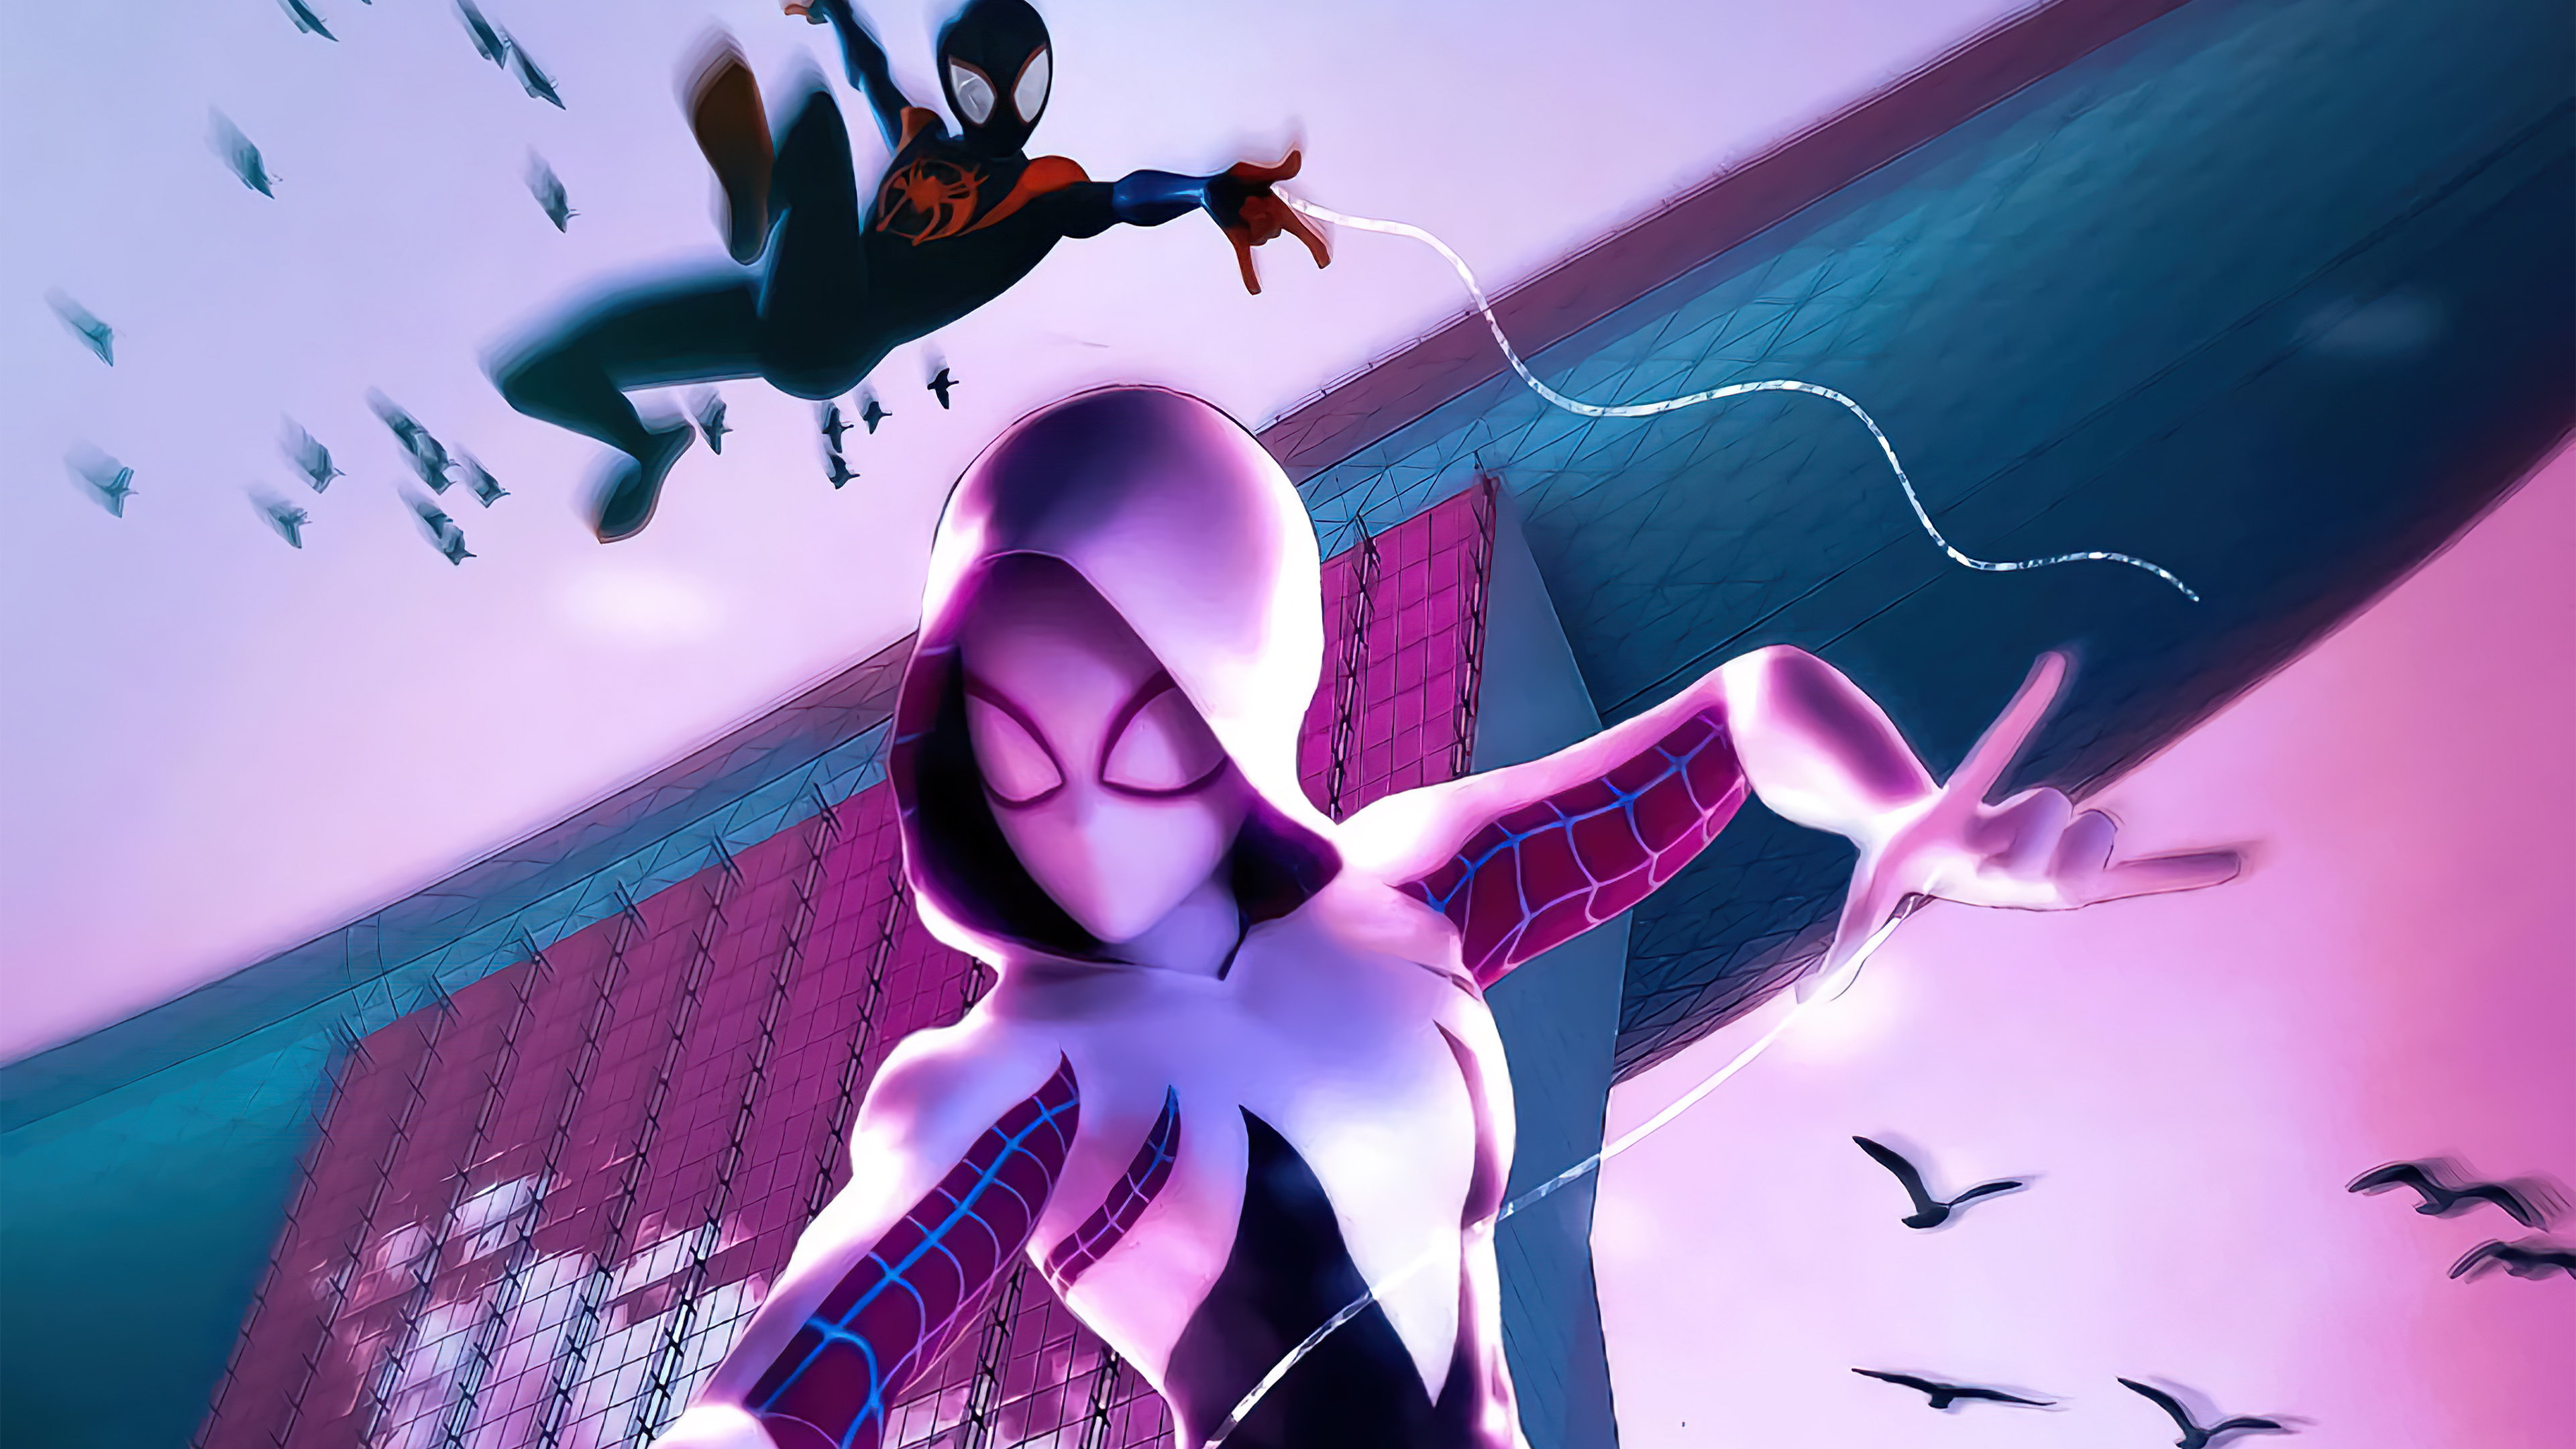 Gwen Stacy and Spider-Man, HD wallpapers, Action-packed scenes, Superhero showdown, 3840x2160 4K Desktop